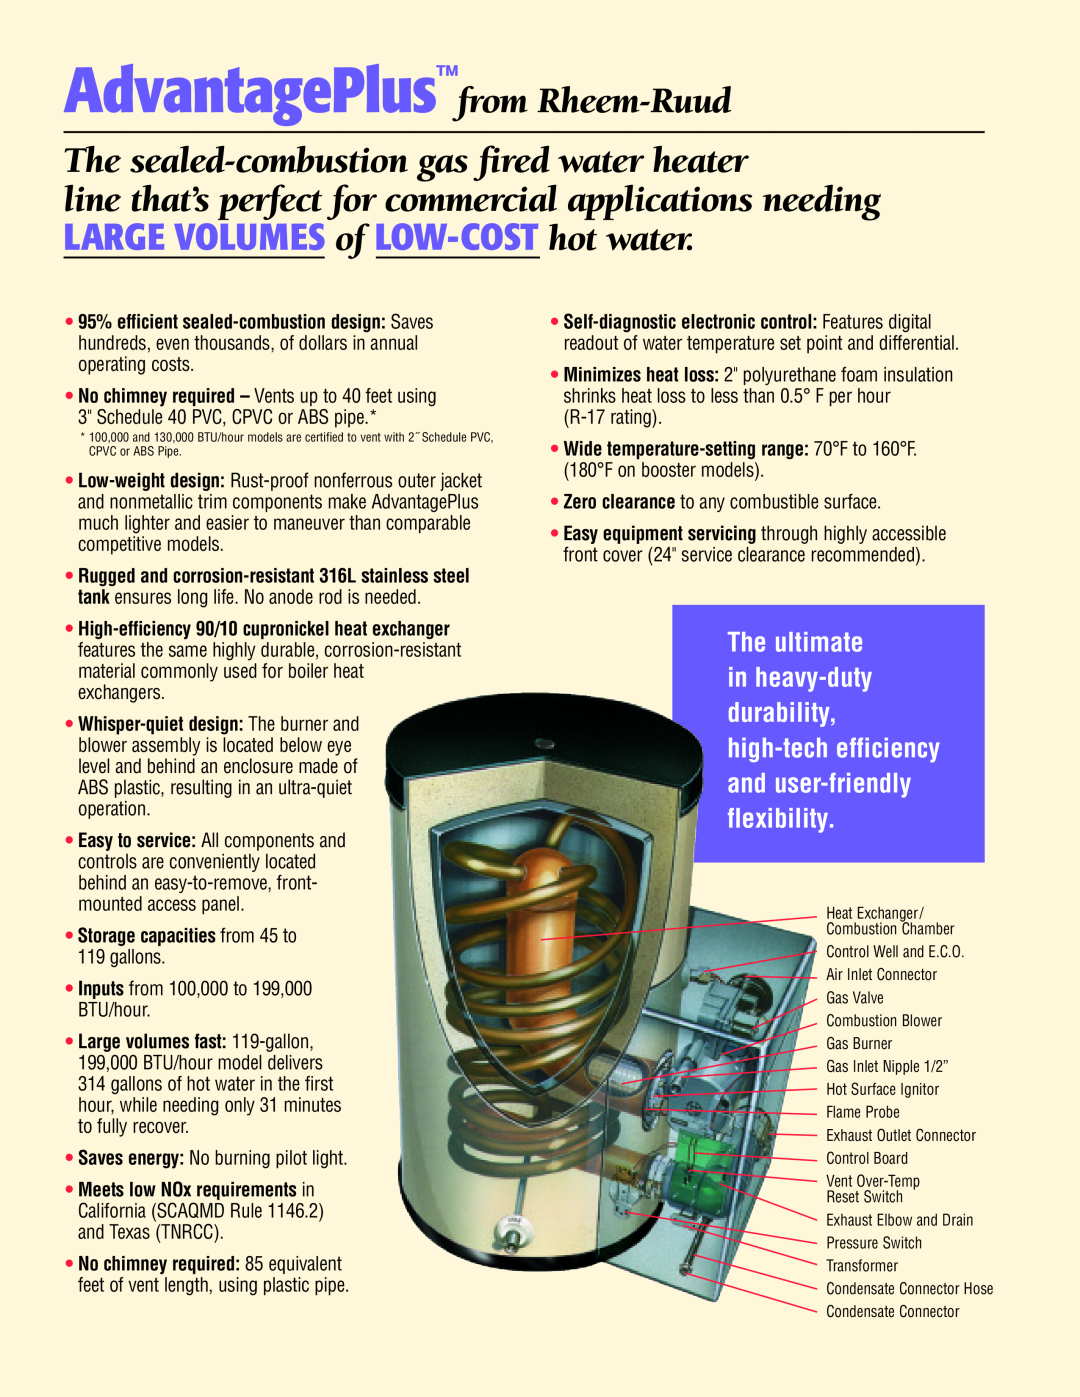 Rheem Advantage Plus manual AdvantagePlusfrom Rheem-Ruud, The sealed-combustion gas fired water heater 